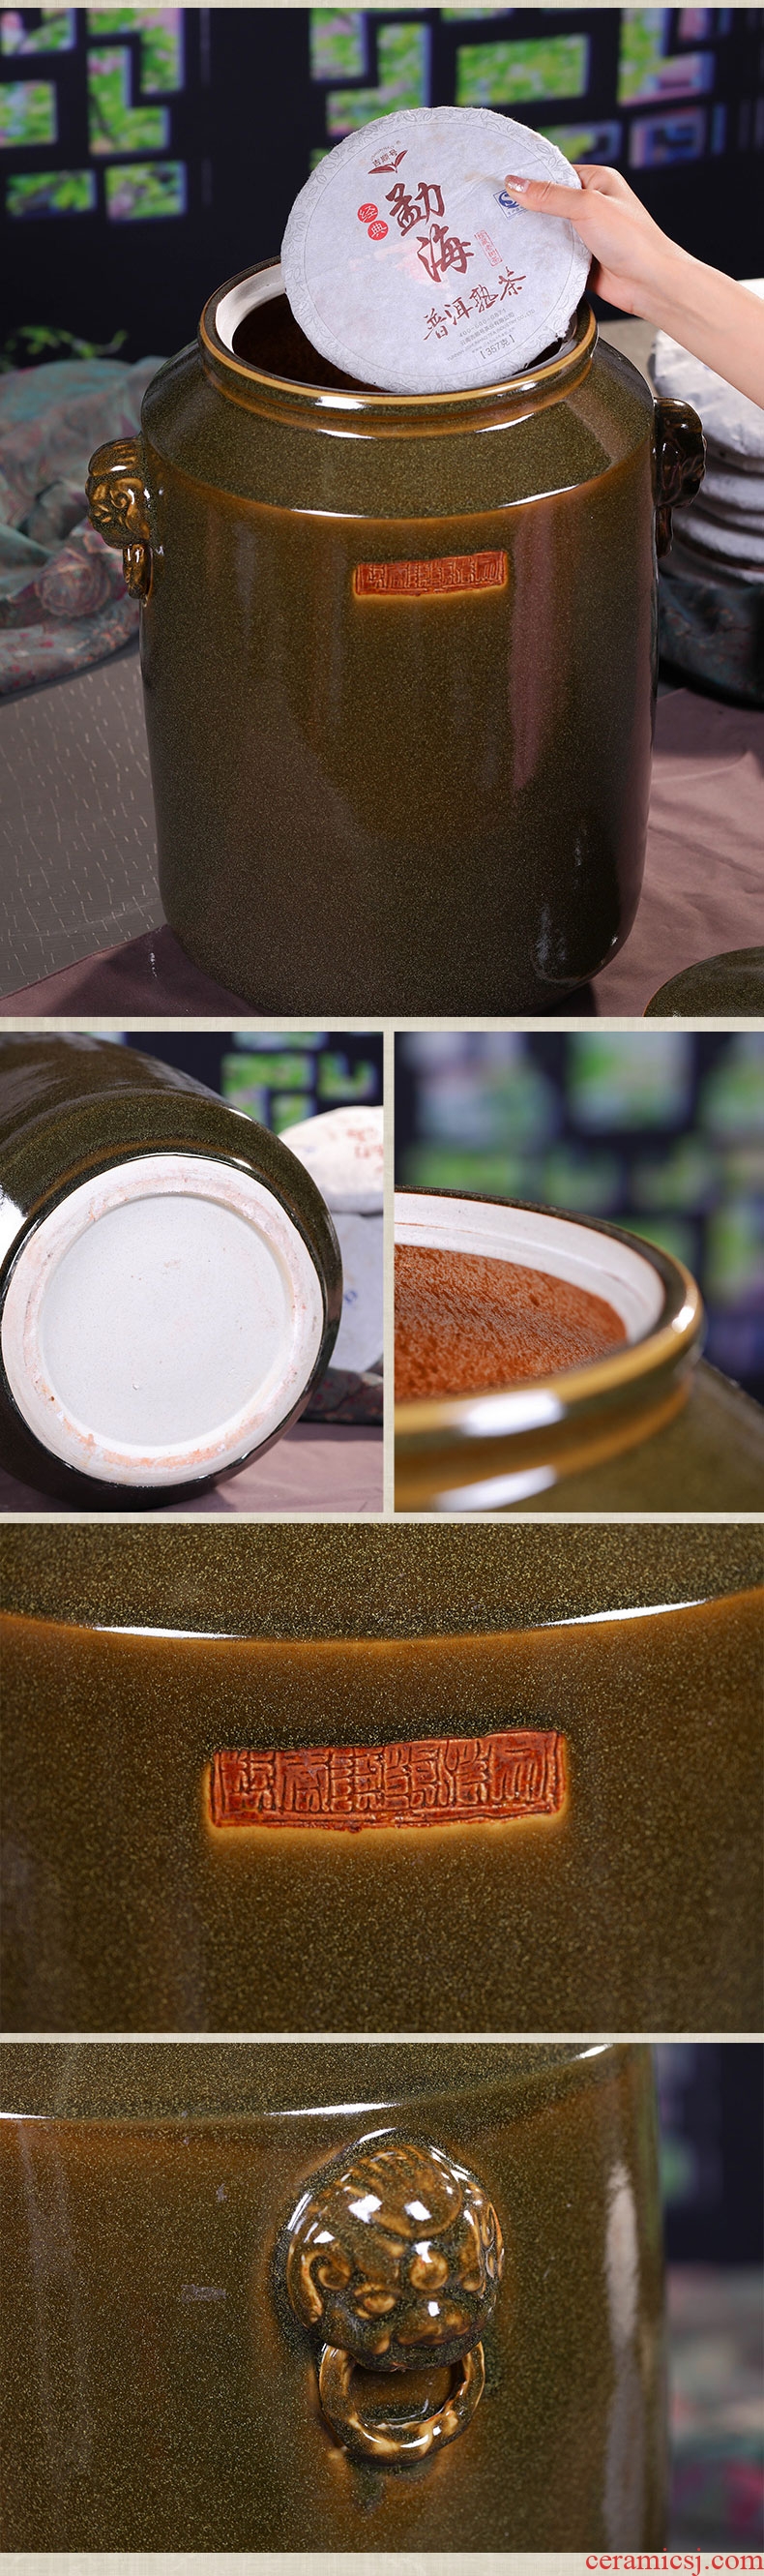 Jingdezhen ceramic tea pot at the end of the day type coarse pottery tea pot store receives a clay-pot large porcelain POTS